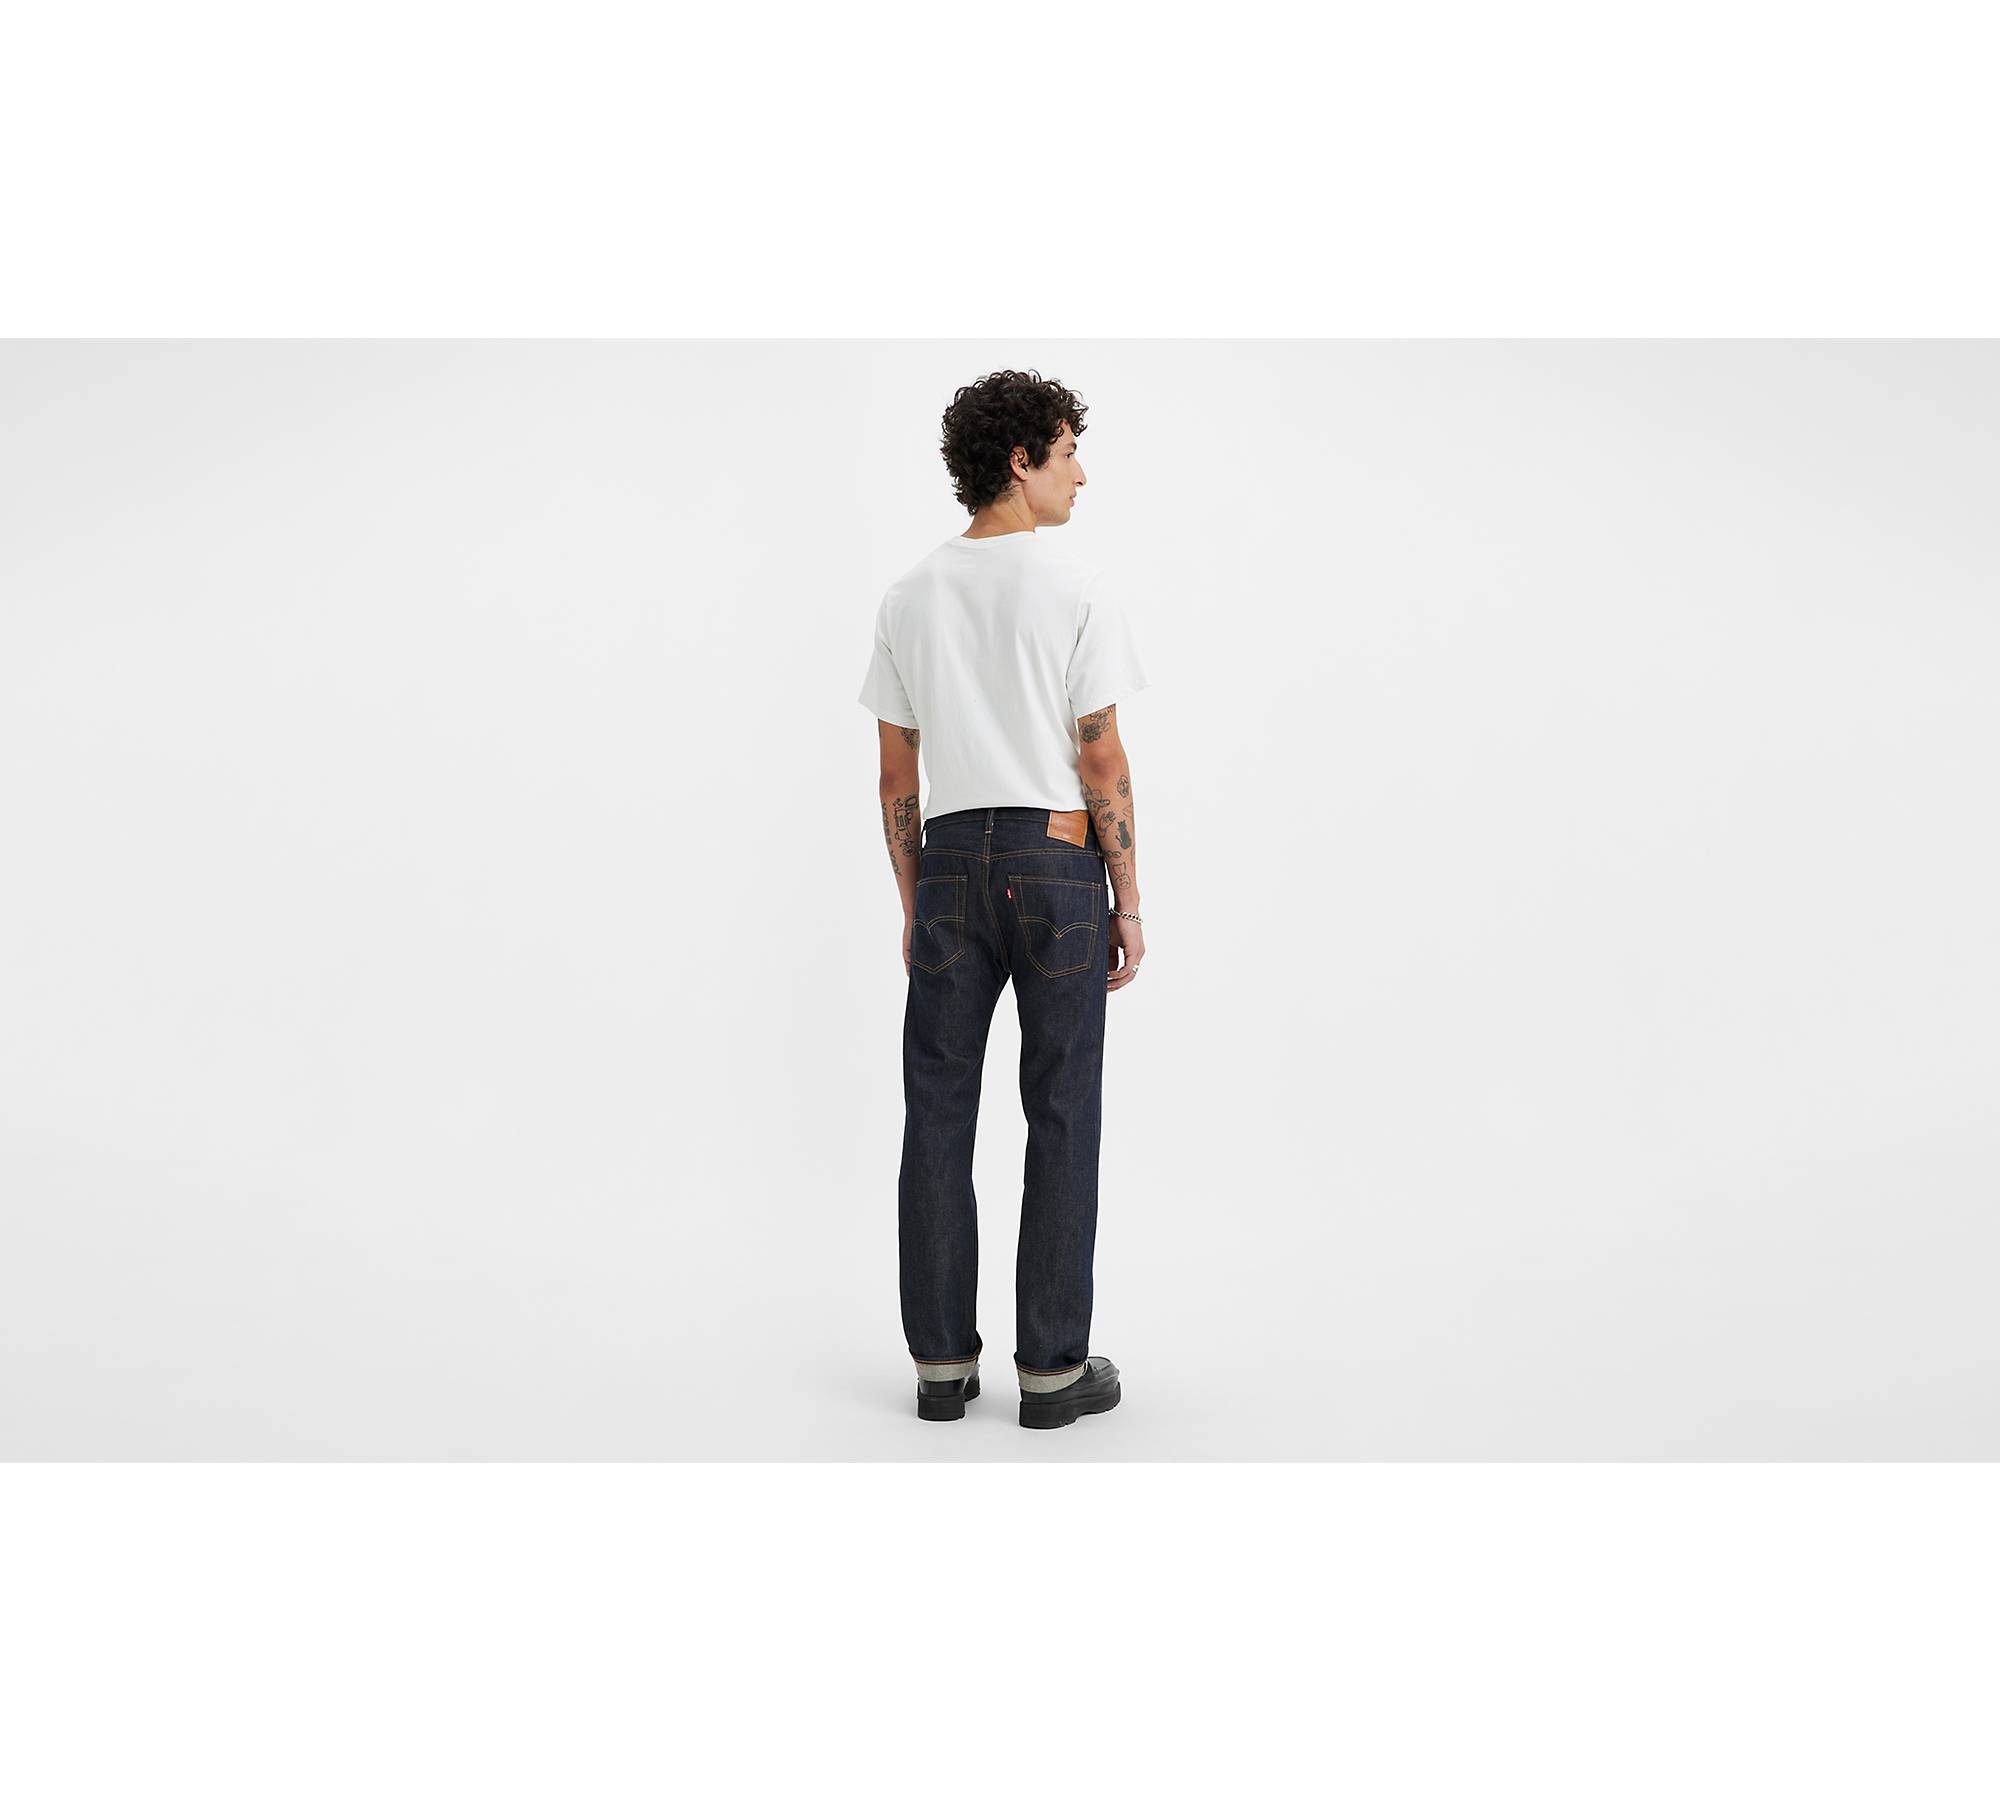 Product Name: Levi's Men's 501 Original Shrink-to-Fit Regular Straight Leg  Jeans